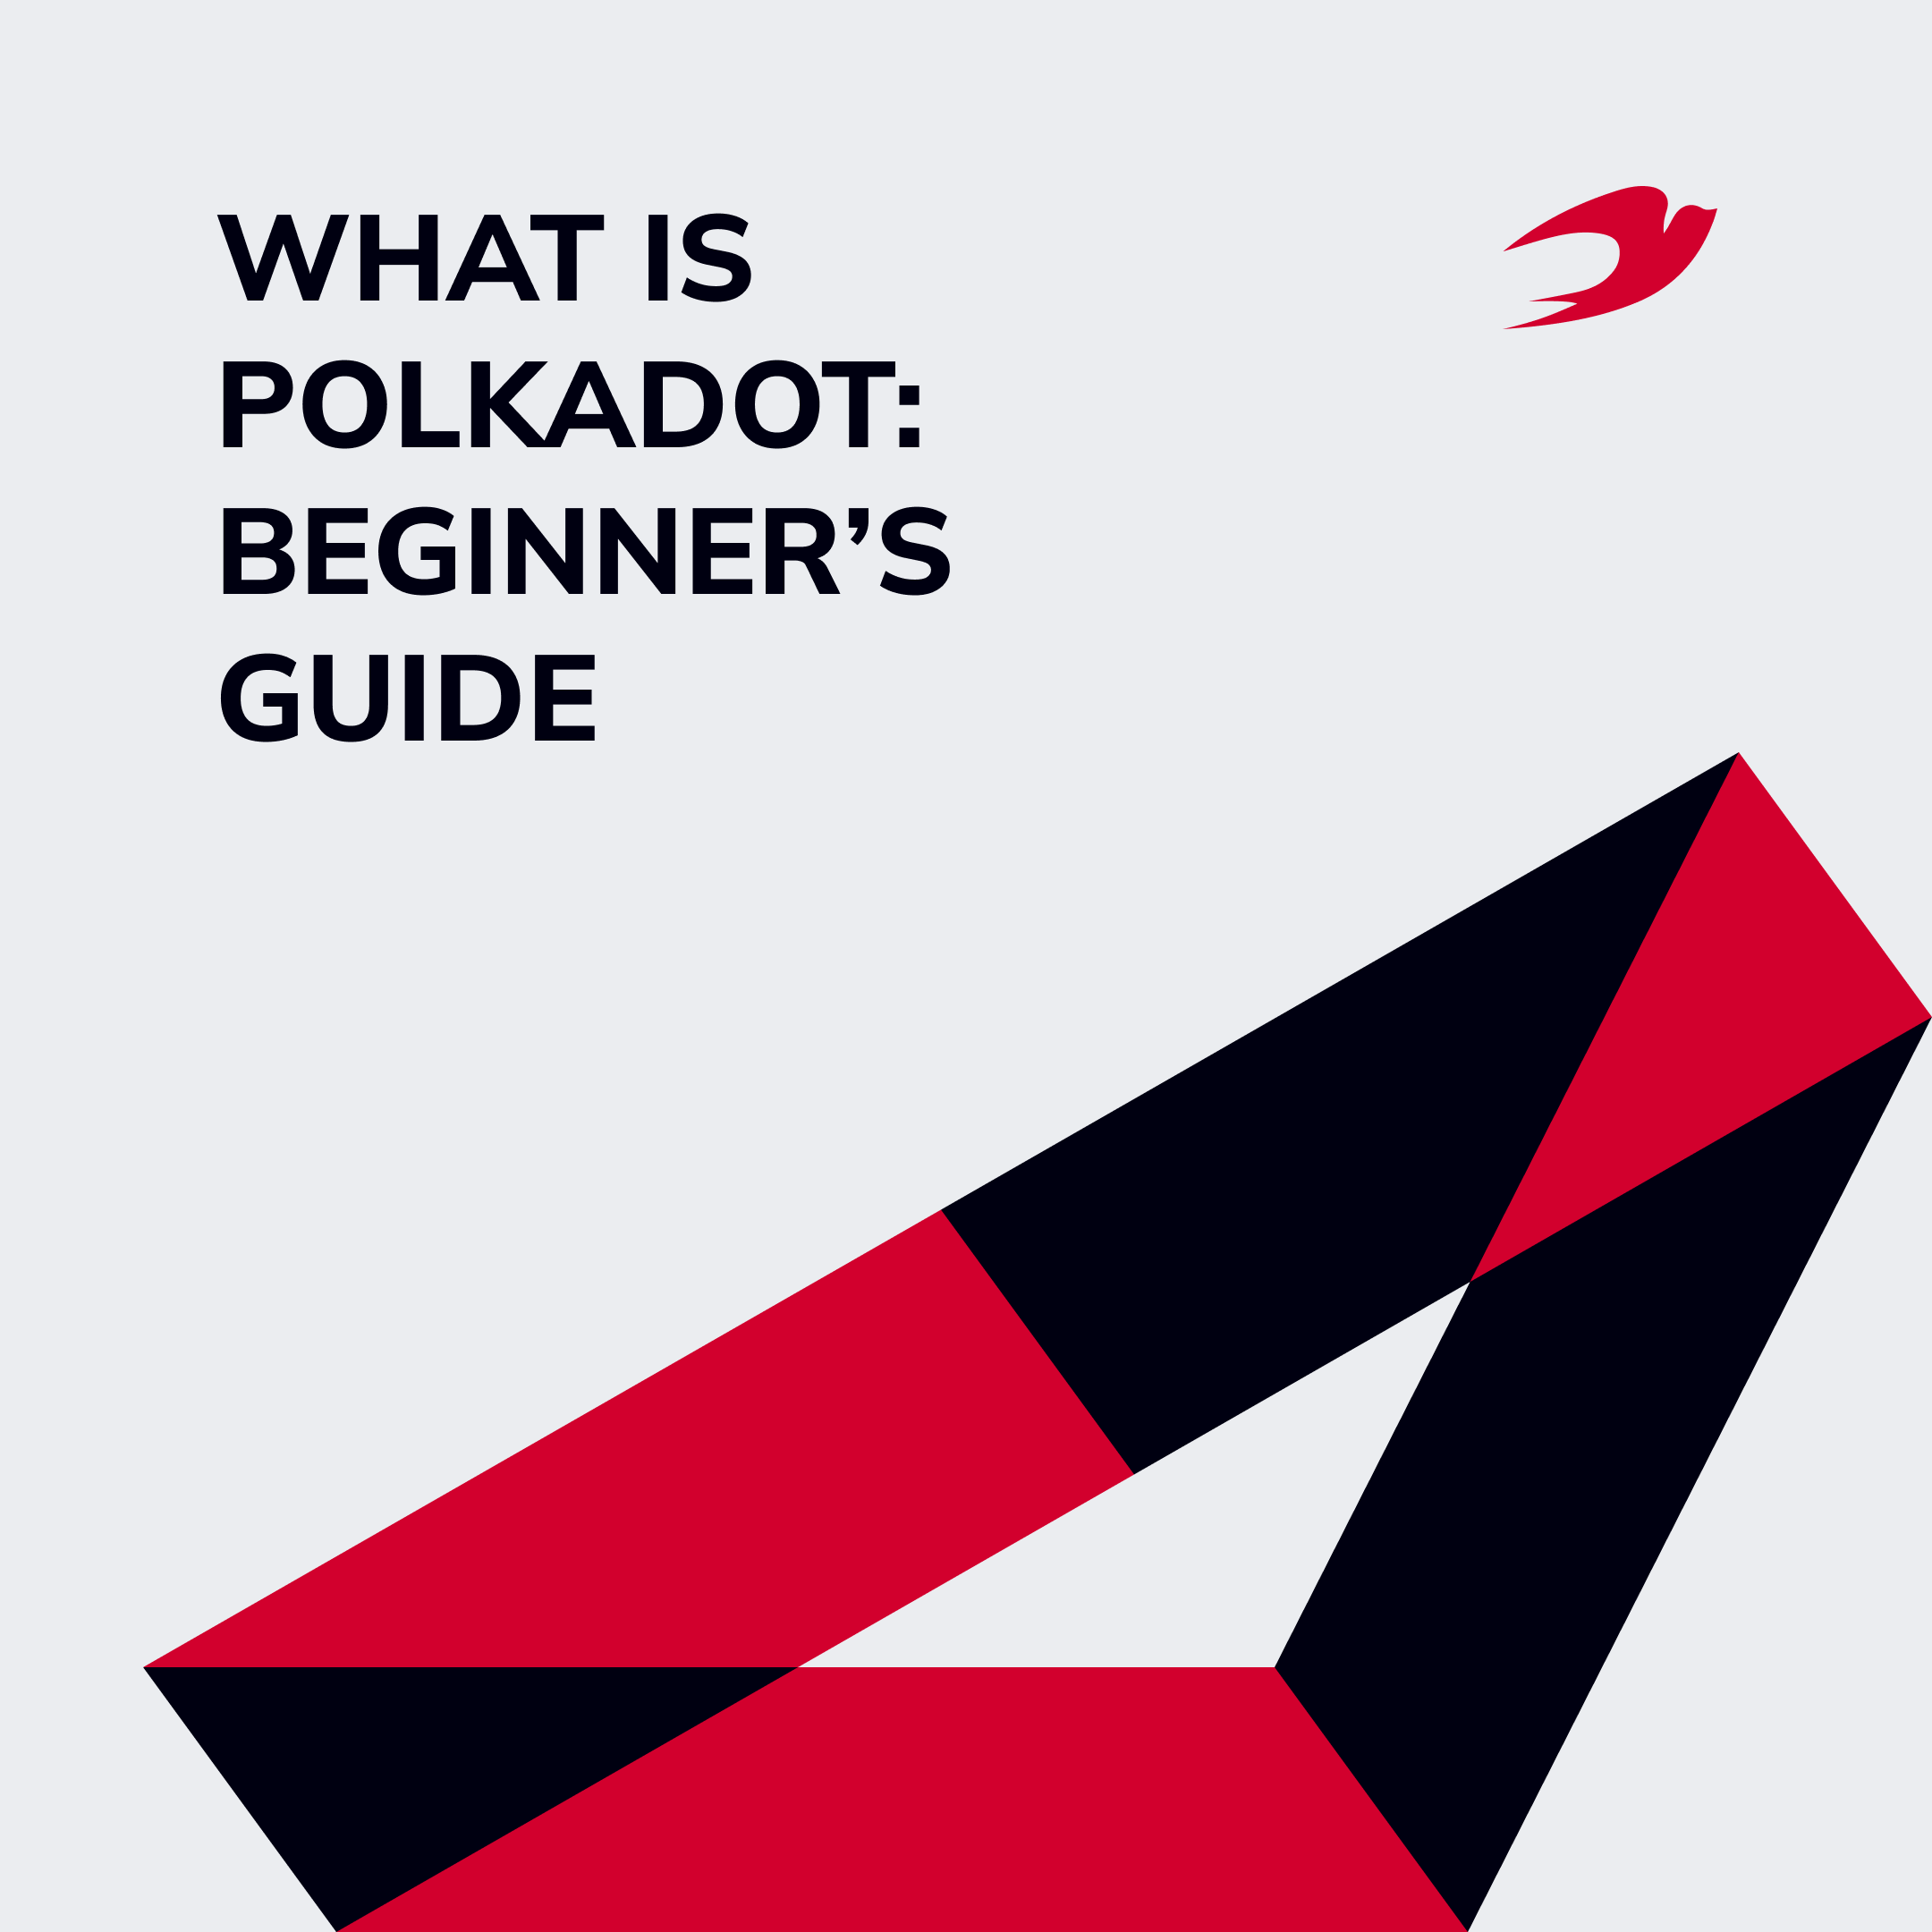 What is Polkadot: Beginner’s Guide